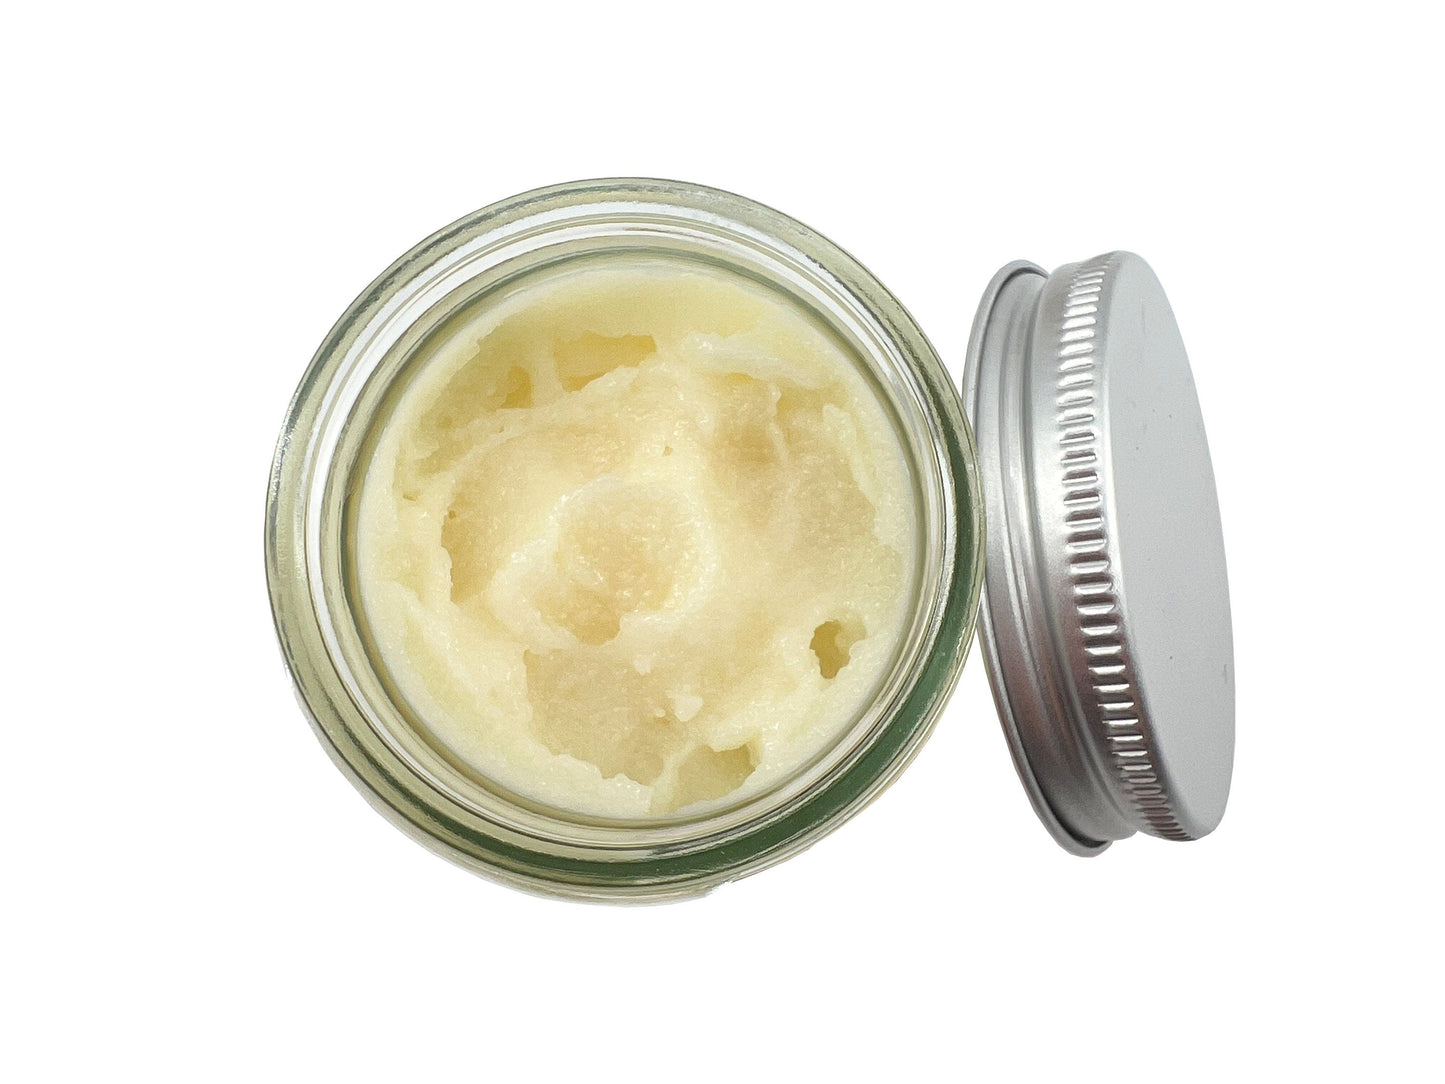 Replenishing Face Balm For Sensitive Skin, 100% Pure Rosehip & Argan, 60ml - Funky Soap Shop